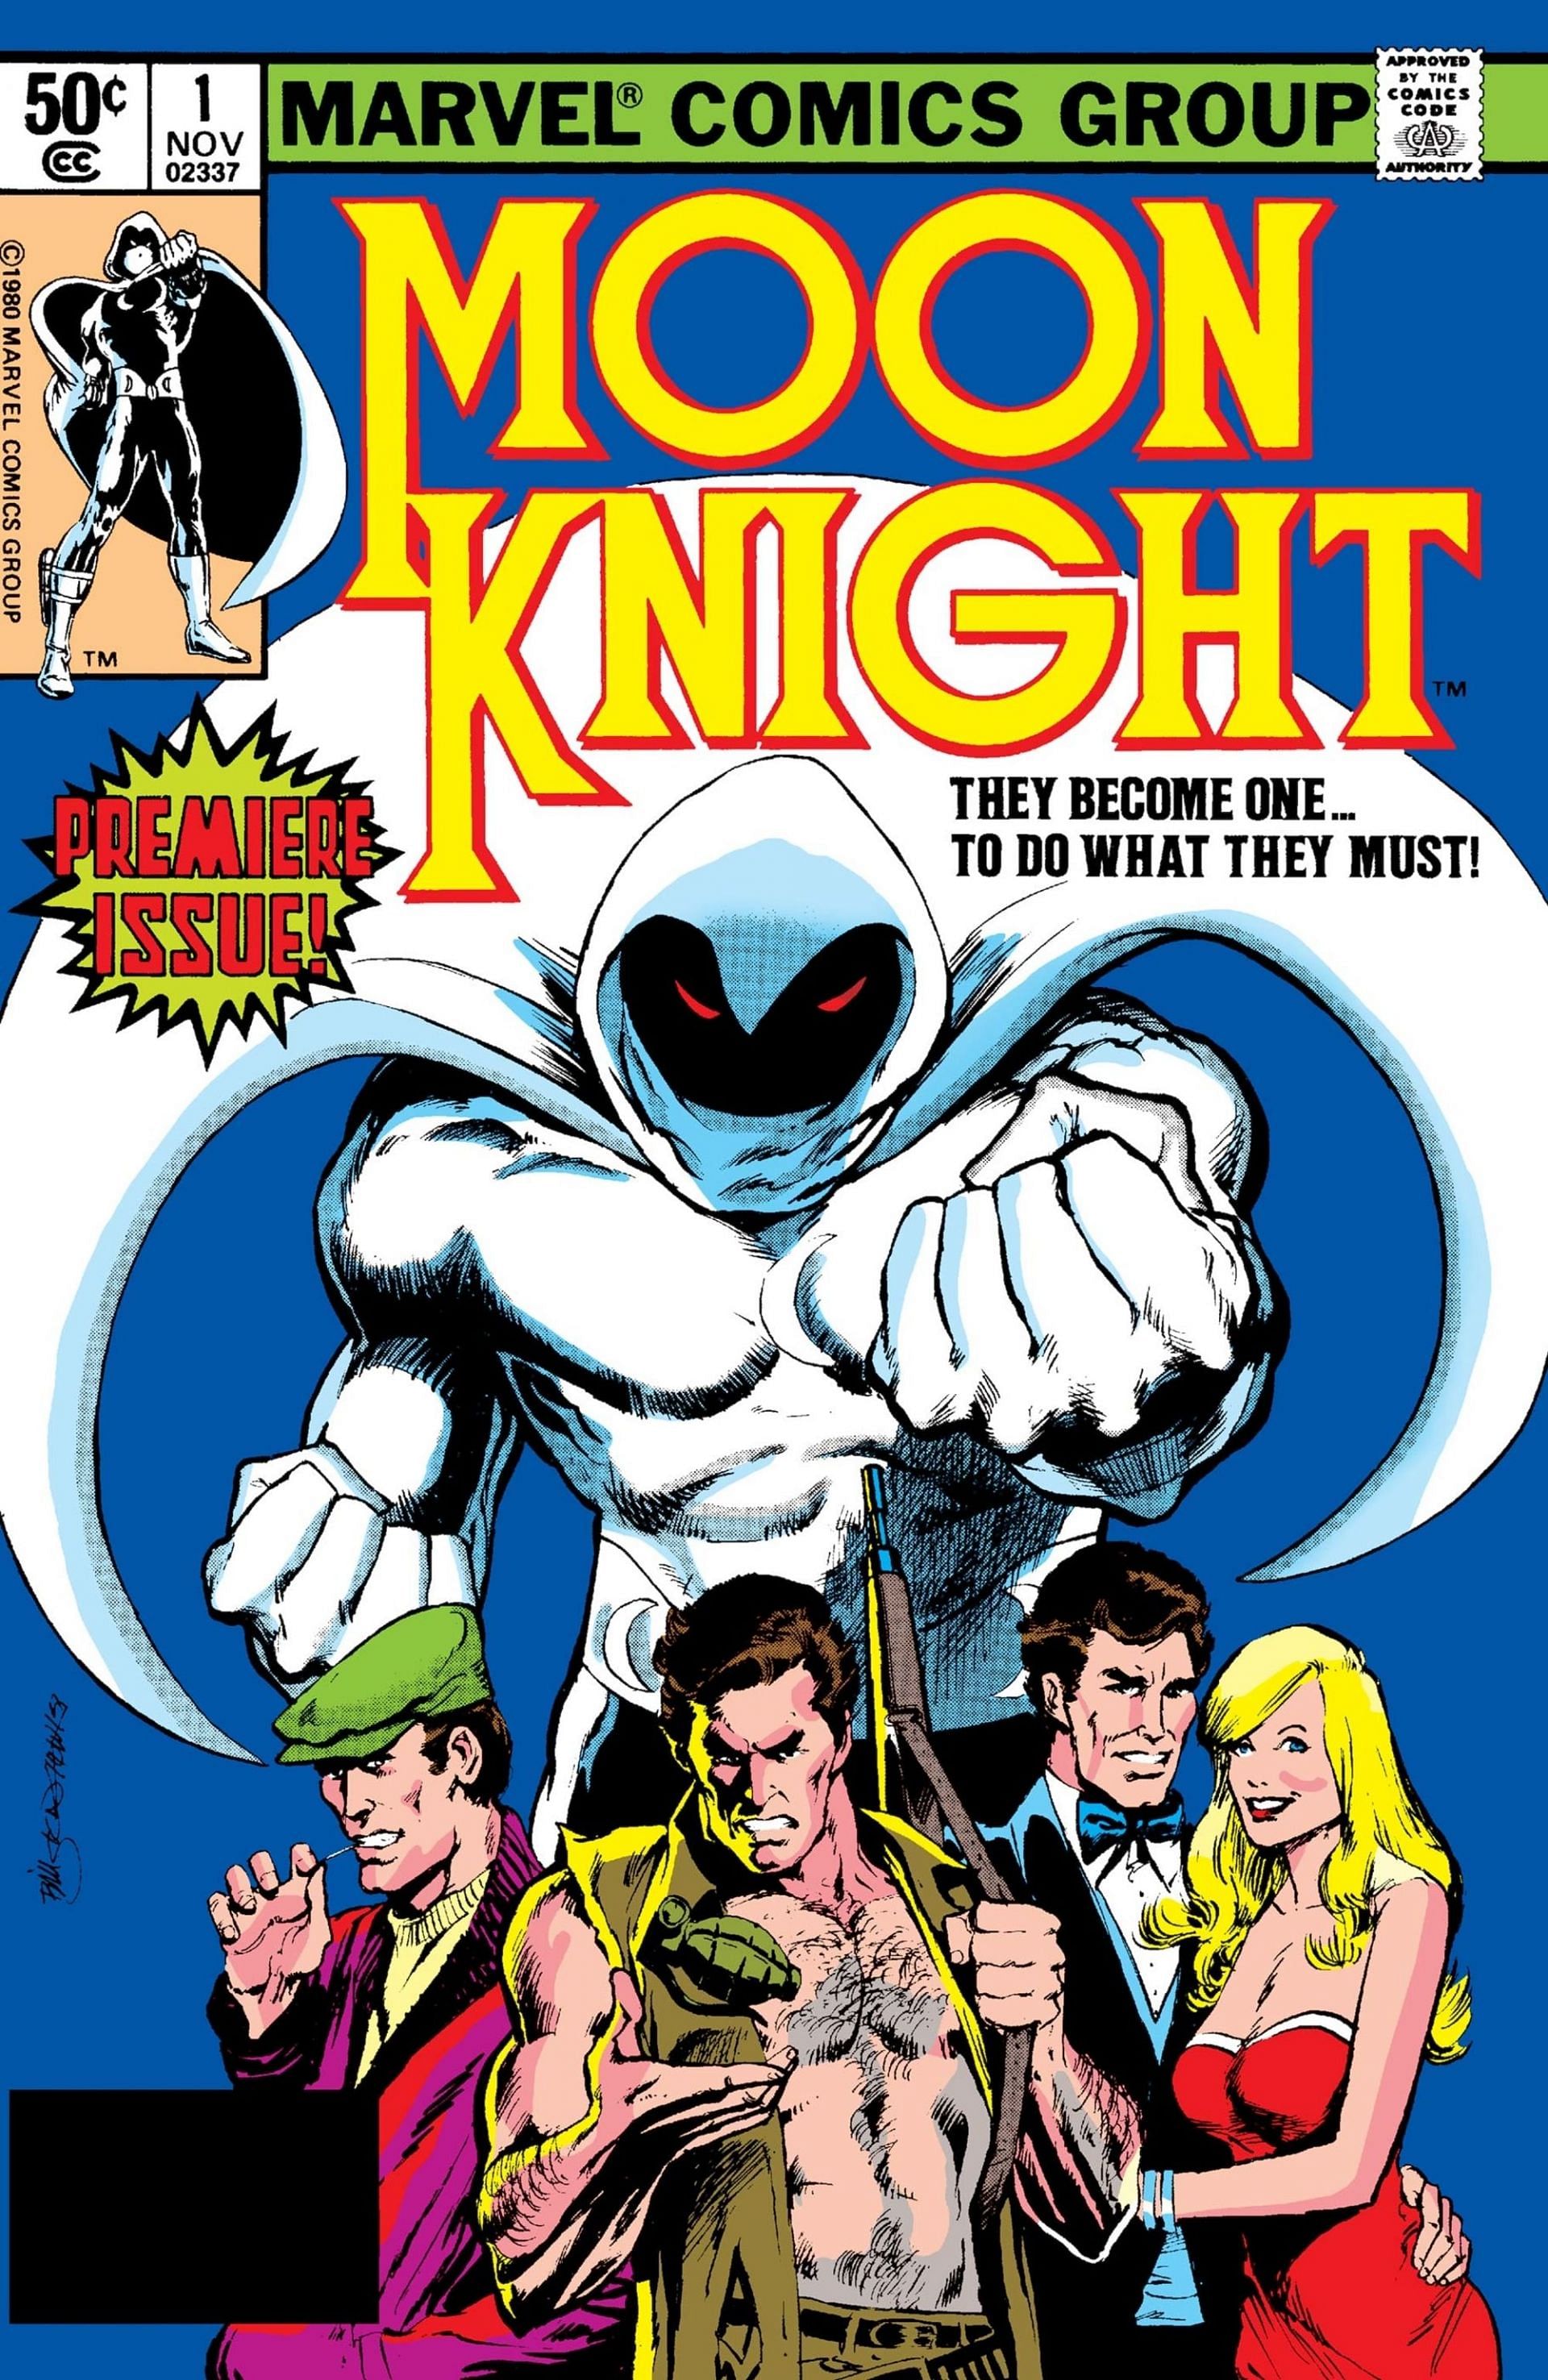 Volume 1 written by Doug Moench (Image via Marvel Comics)